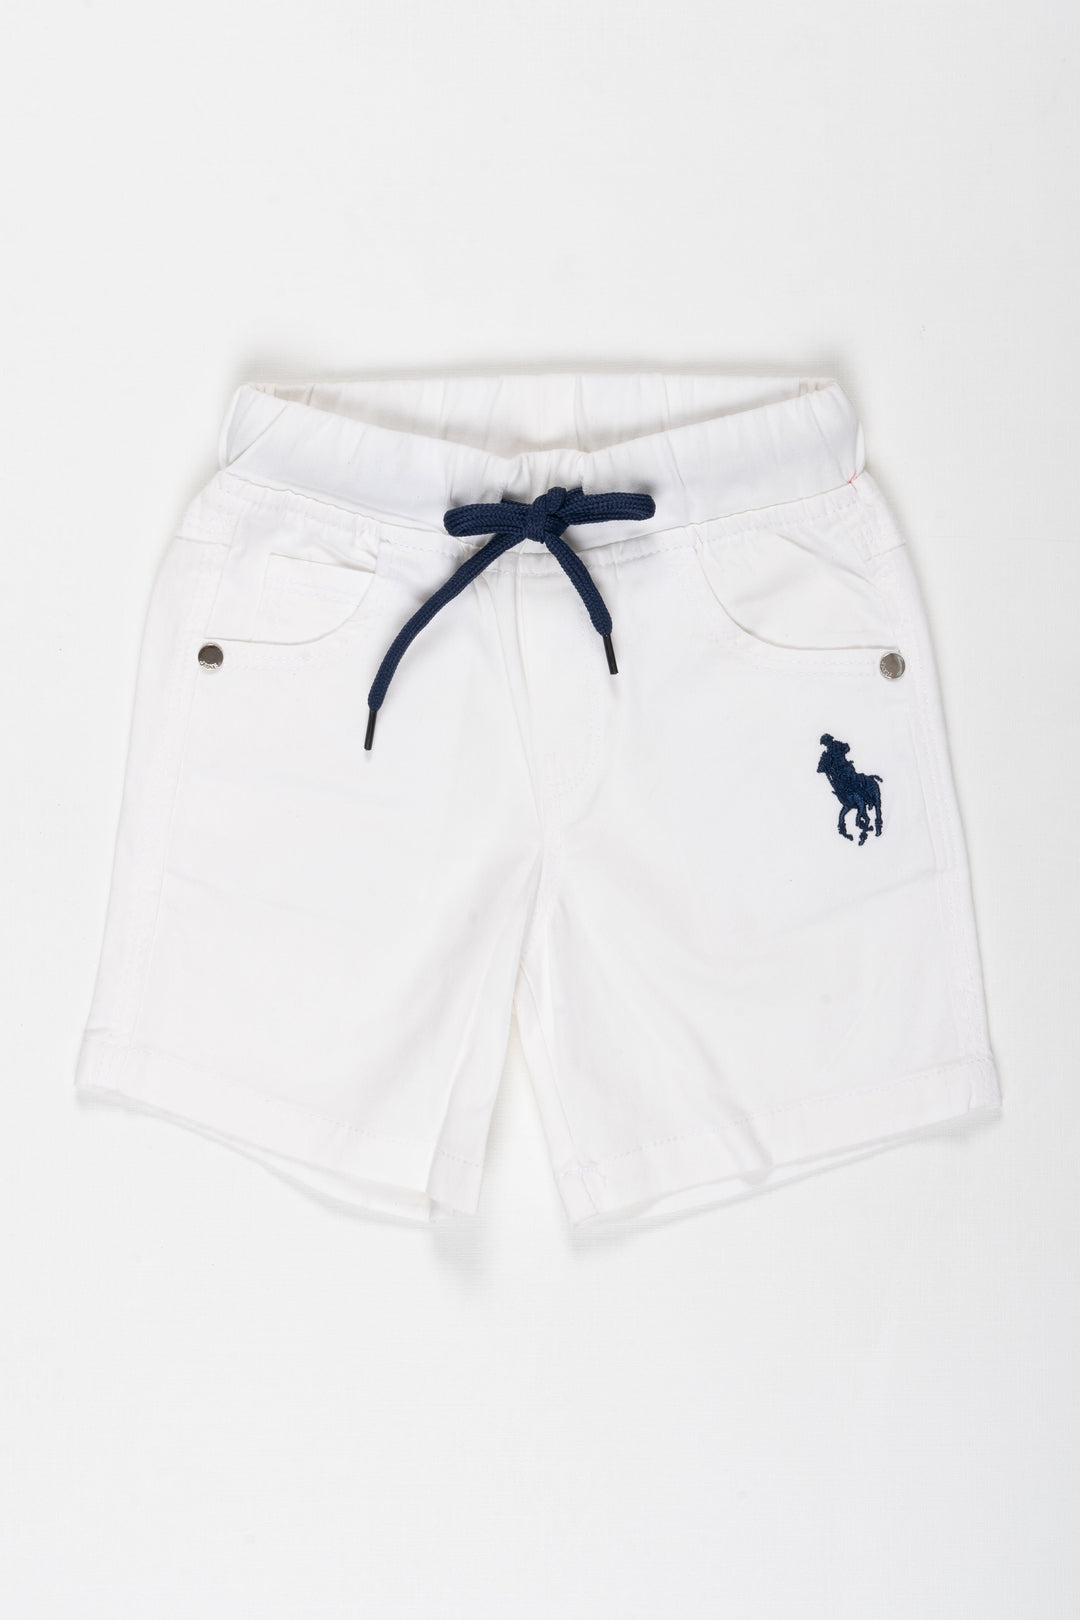 The Nesavu Boys Shorts Boys White Cotton Shorts with Emblem Detail Nesavu 18 (2Y) / White / Cotton BWS001A-18 Boys White Cotton Casual Shorts | Emblem Drawstring Summer Shorts | The Nesavu